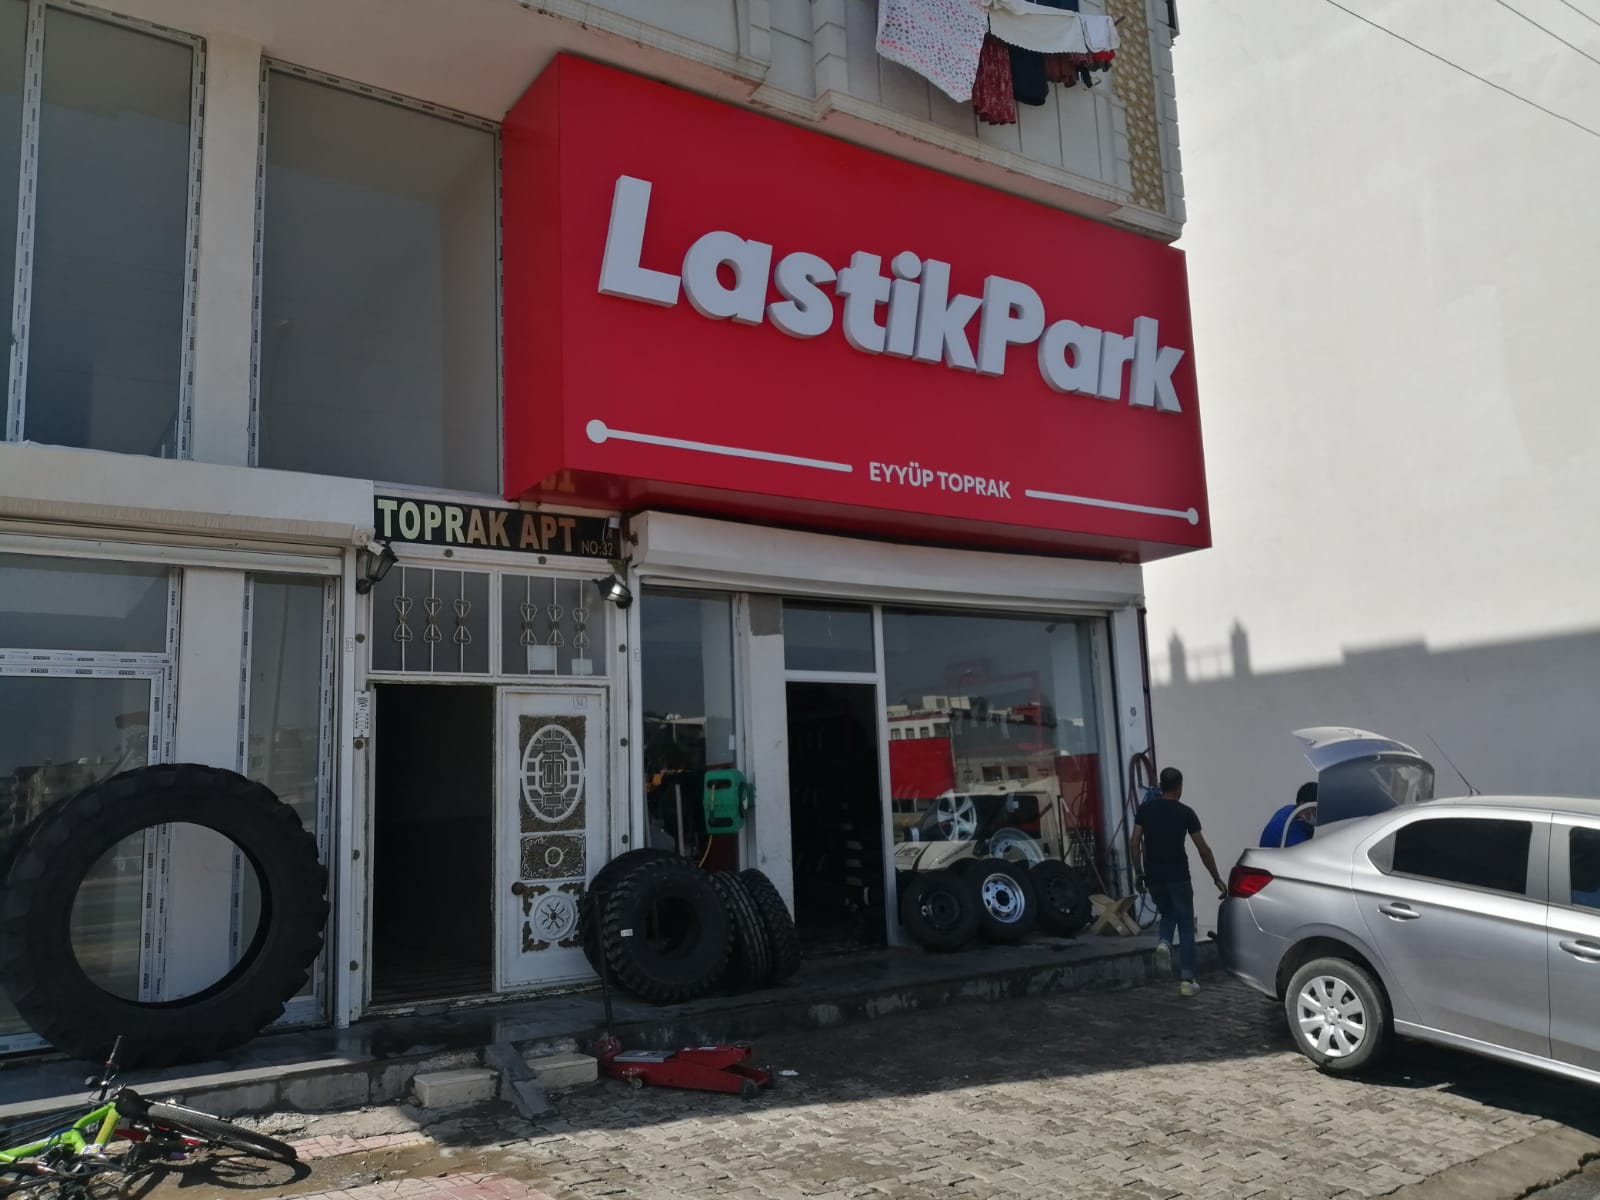 Viranşehir Lastik Park-0543 313 1123-Eyüp Toprak